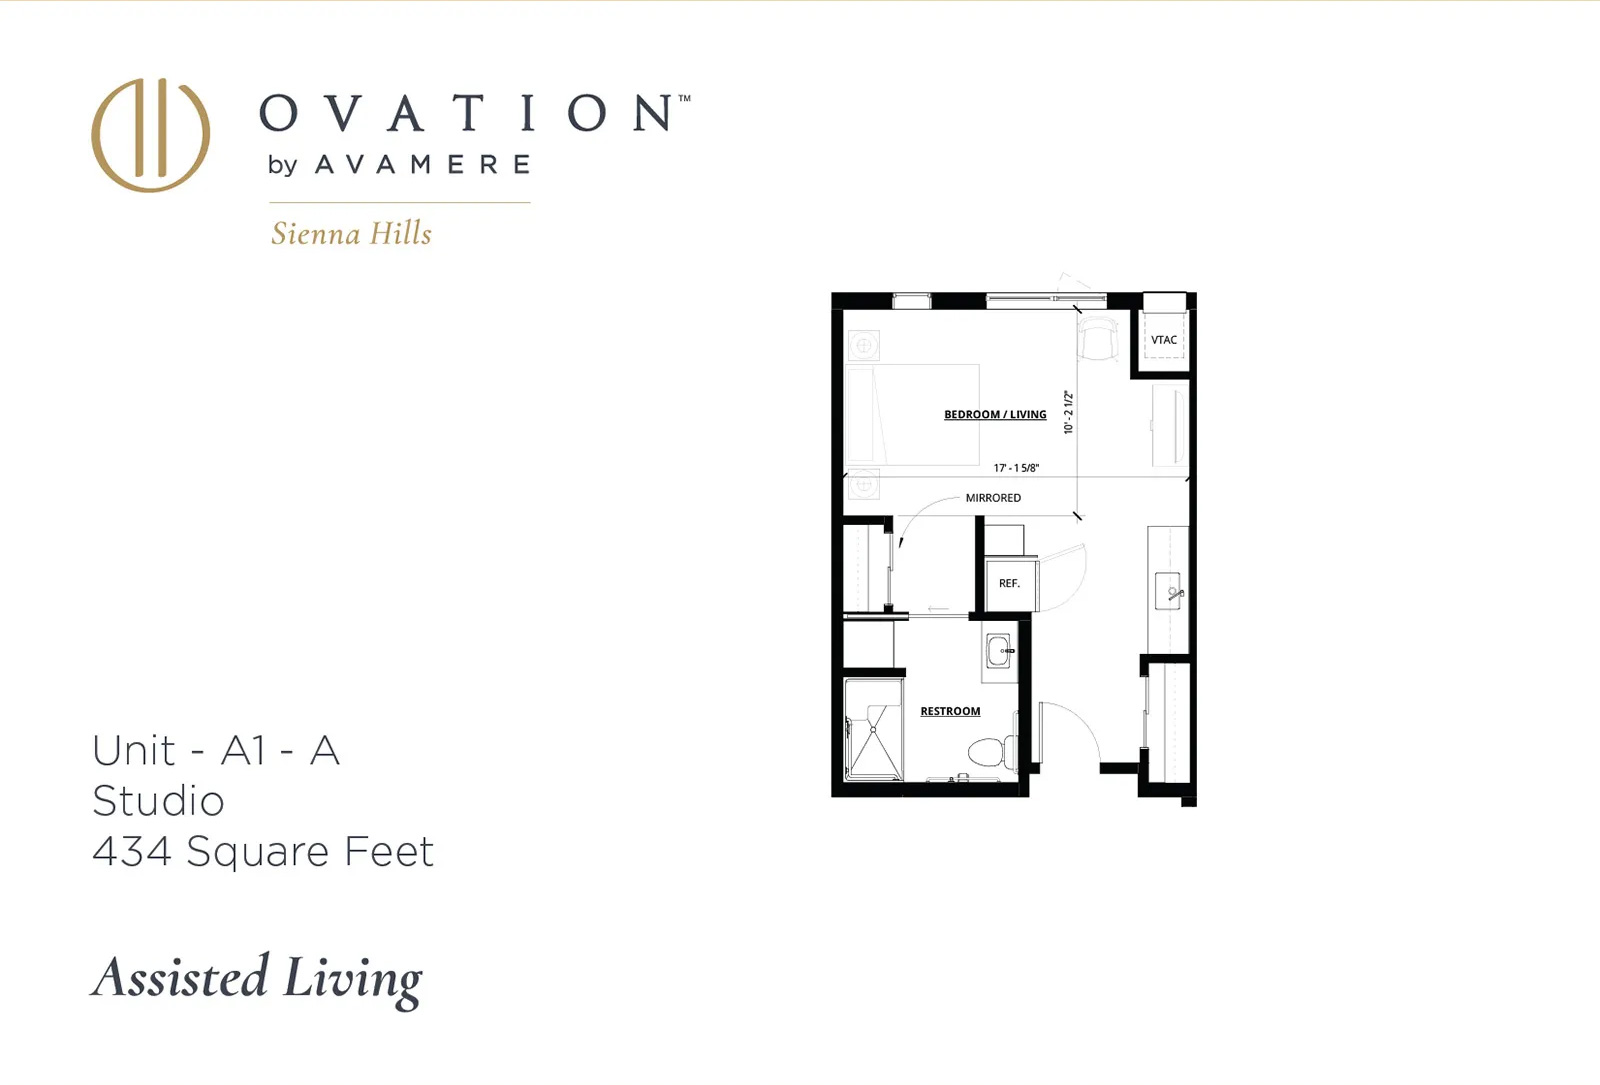 Ovation Sienna Hills Studio Floorplan 434 sq ft